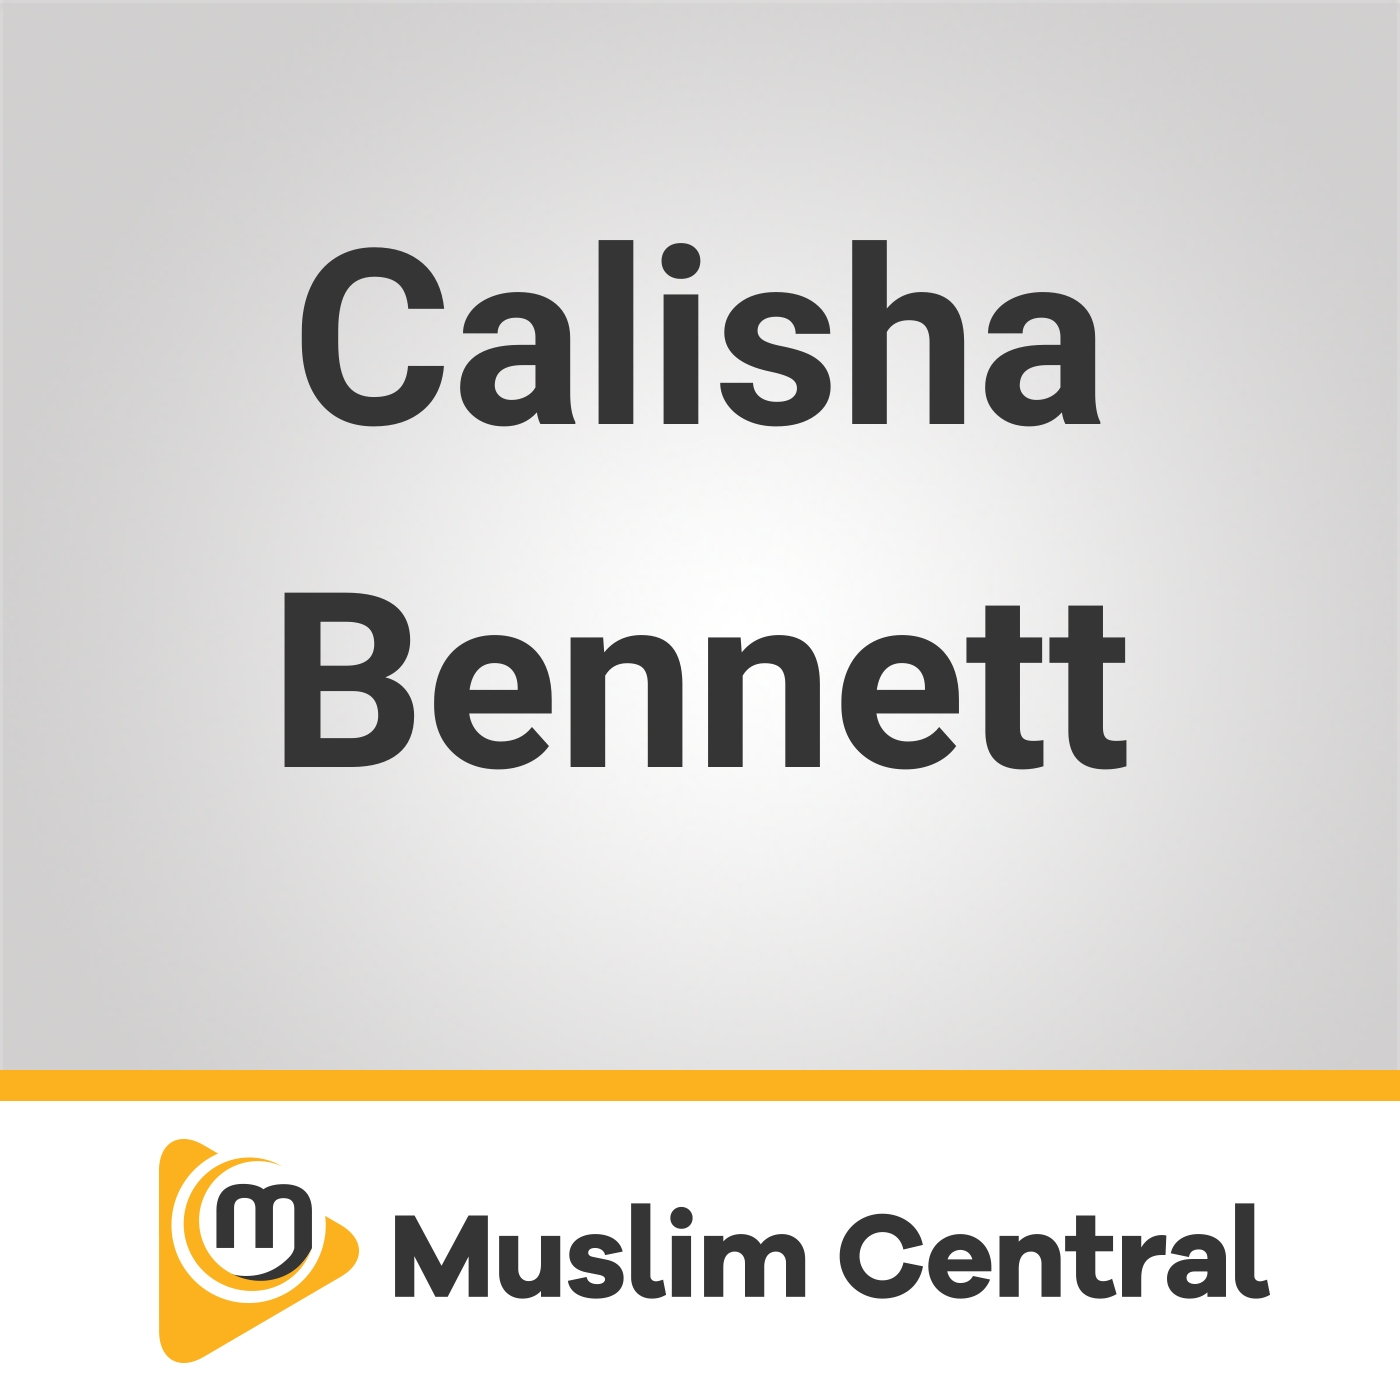 Calisha Bennett